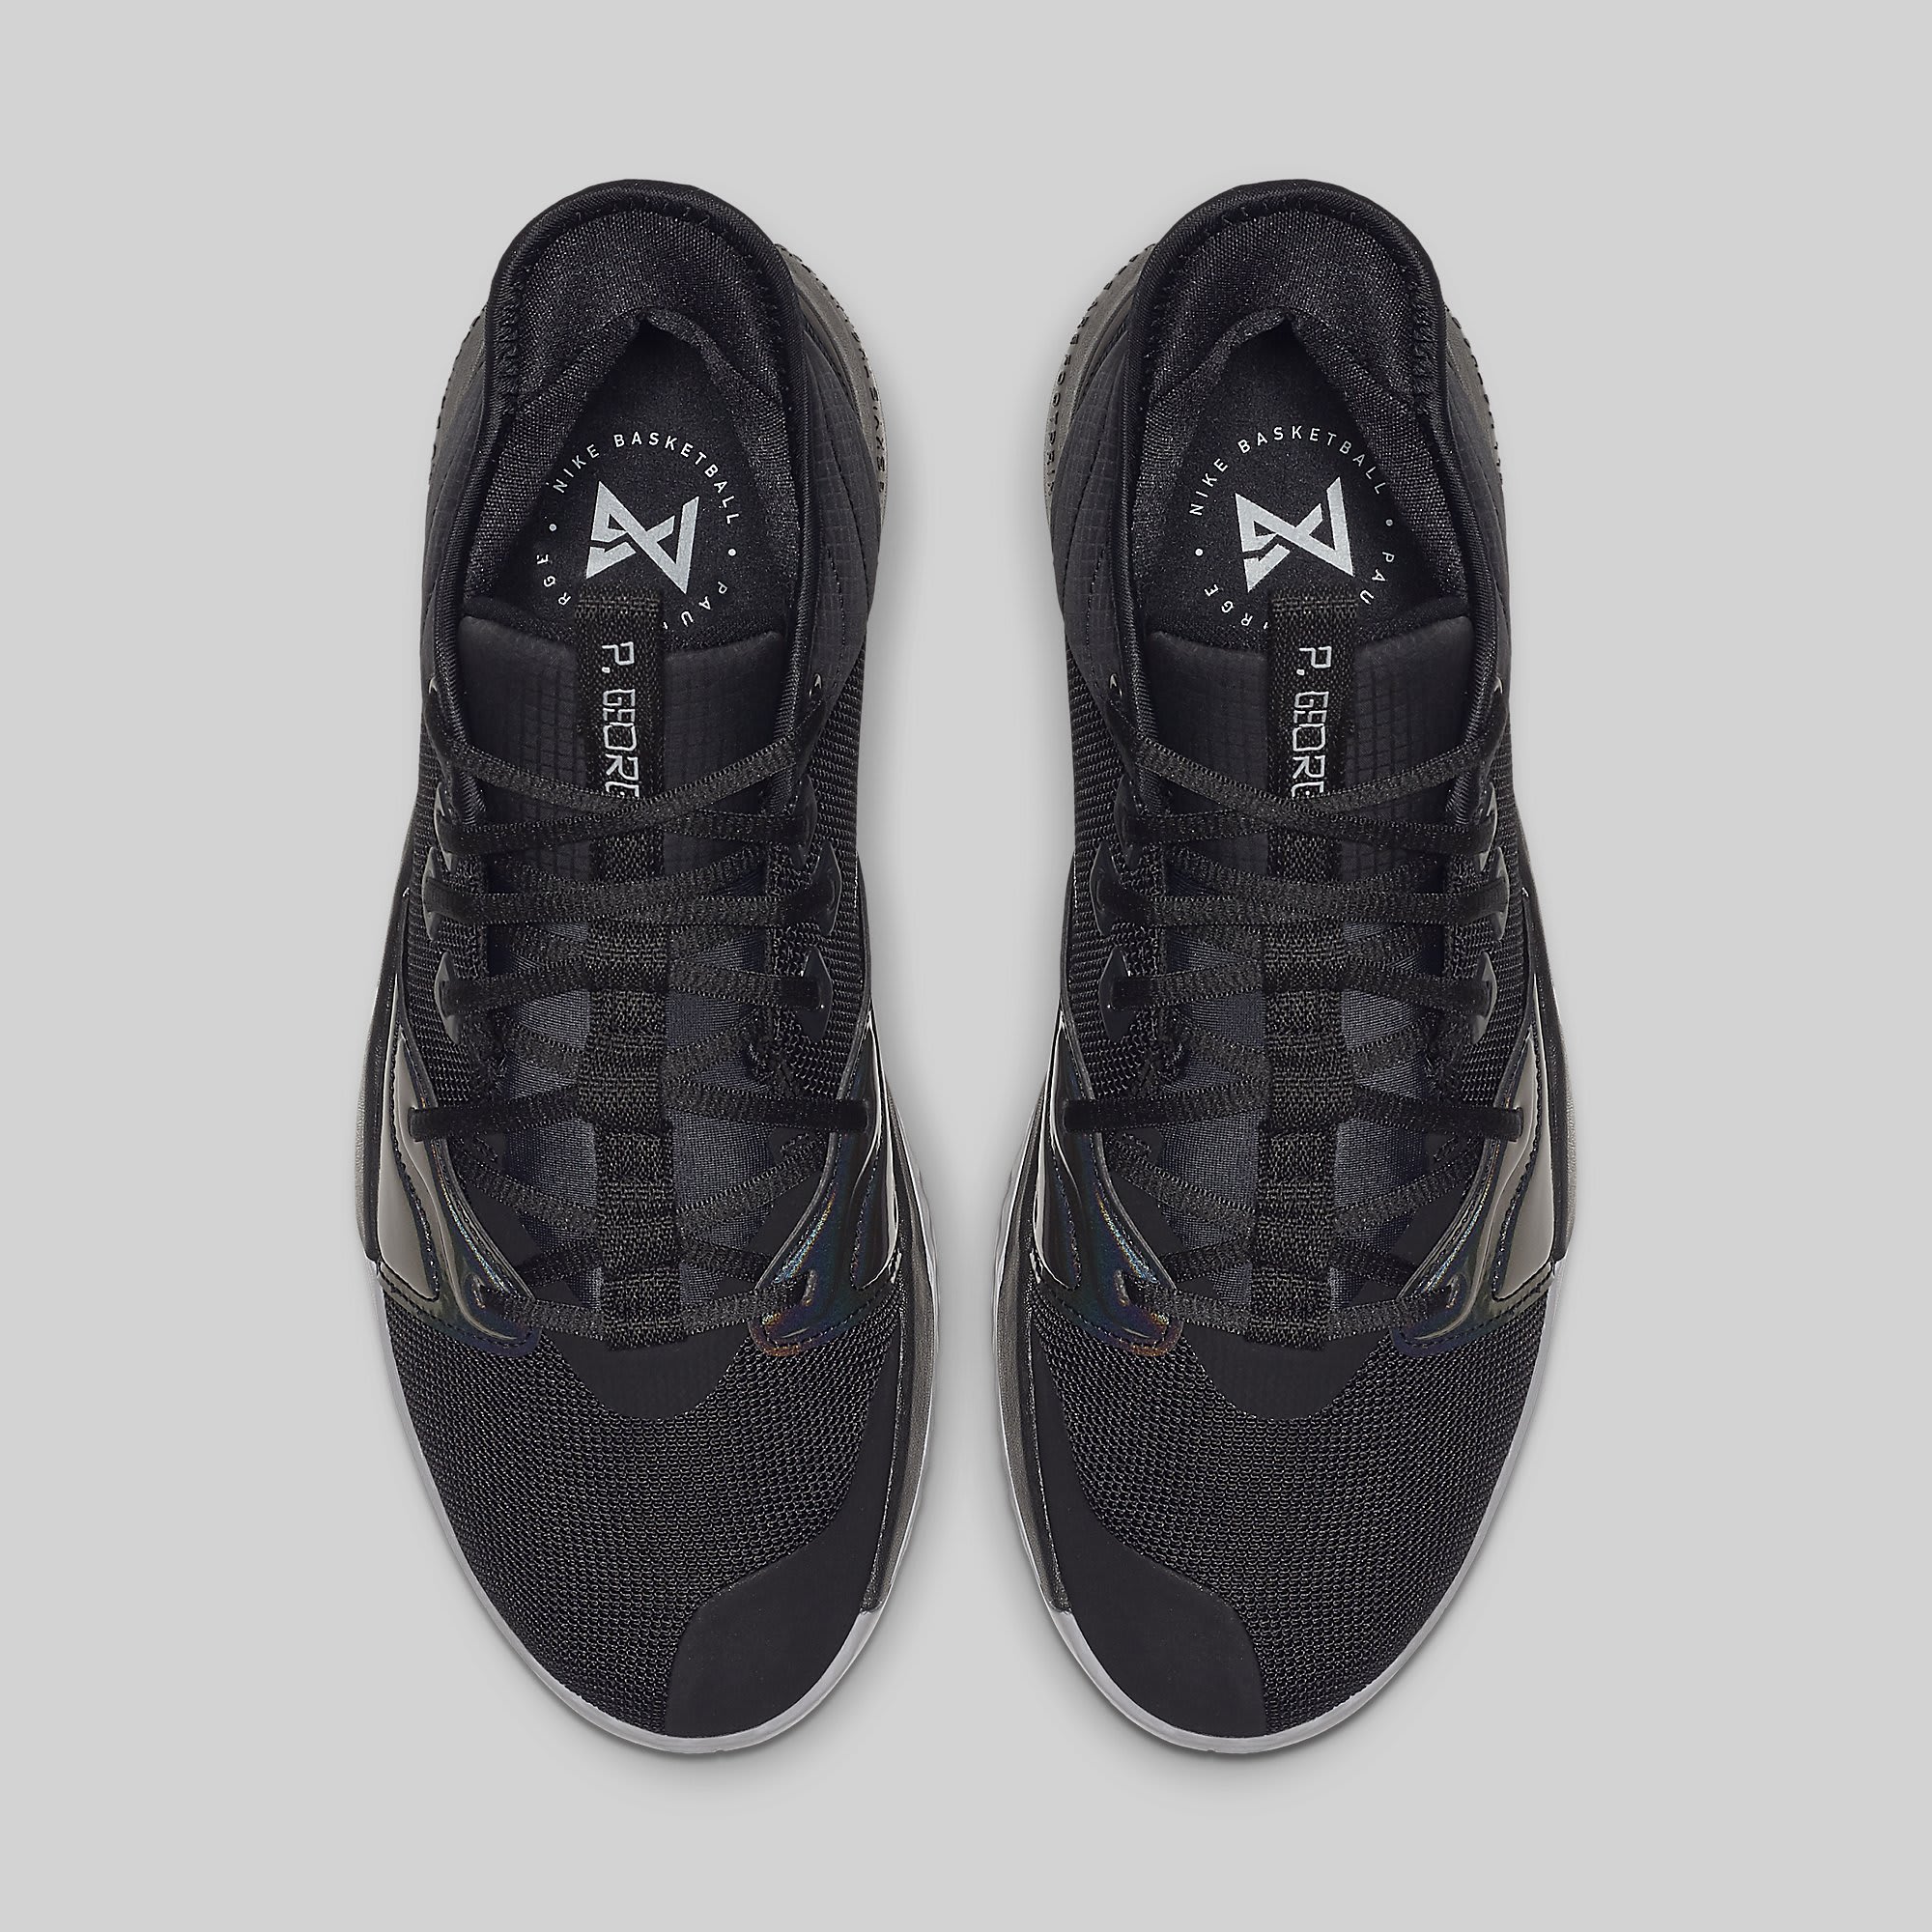 Nike PG 3 Black/Black AO2607-003 Pair